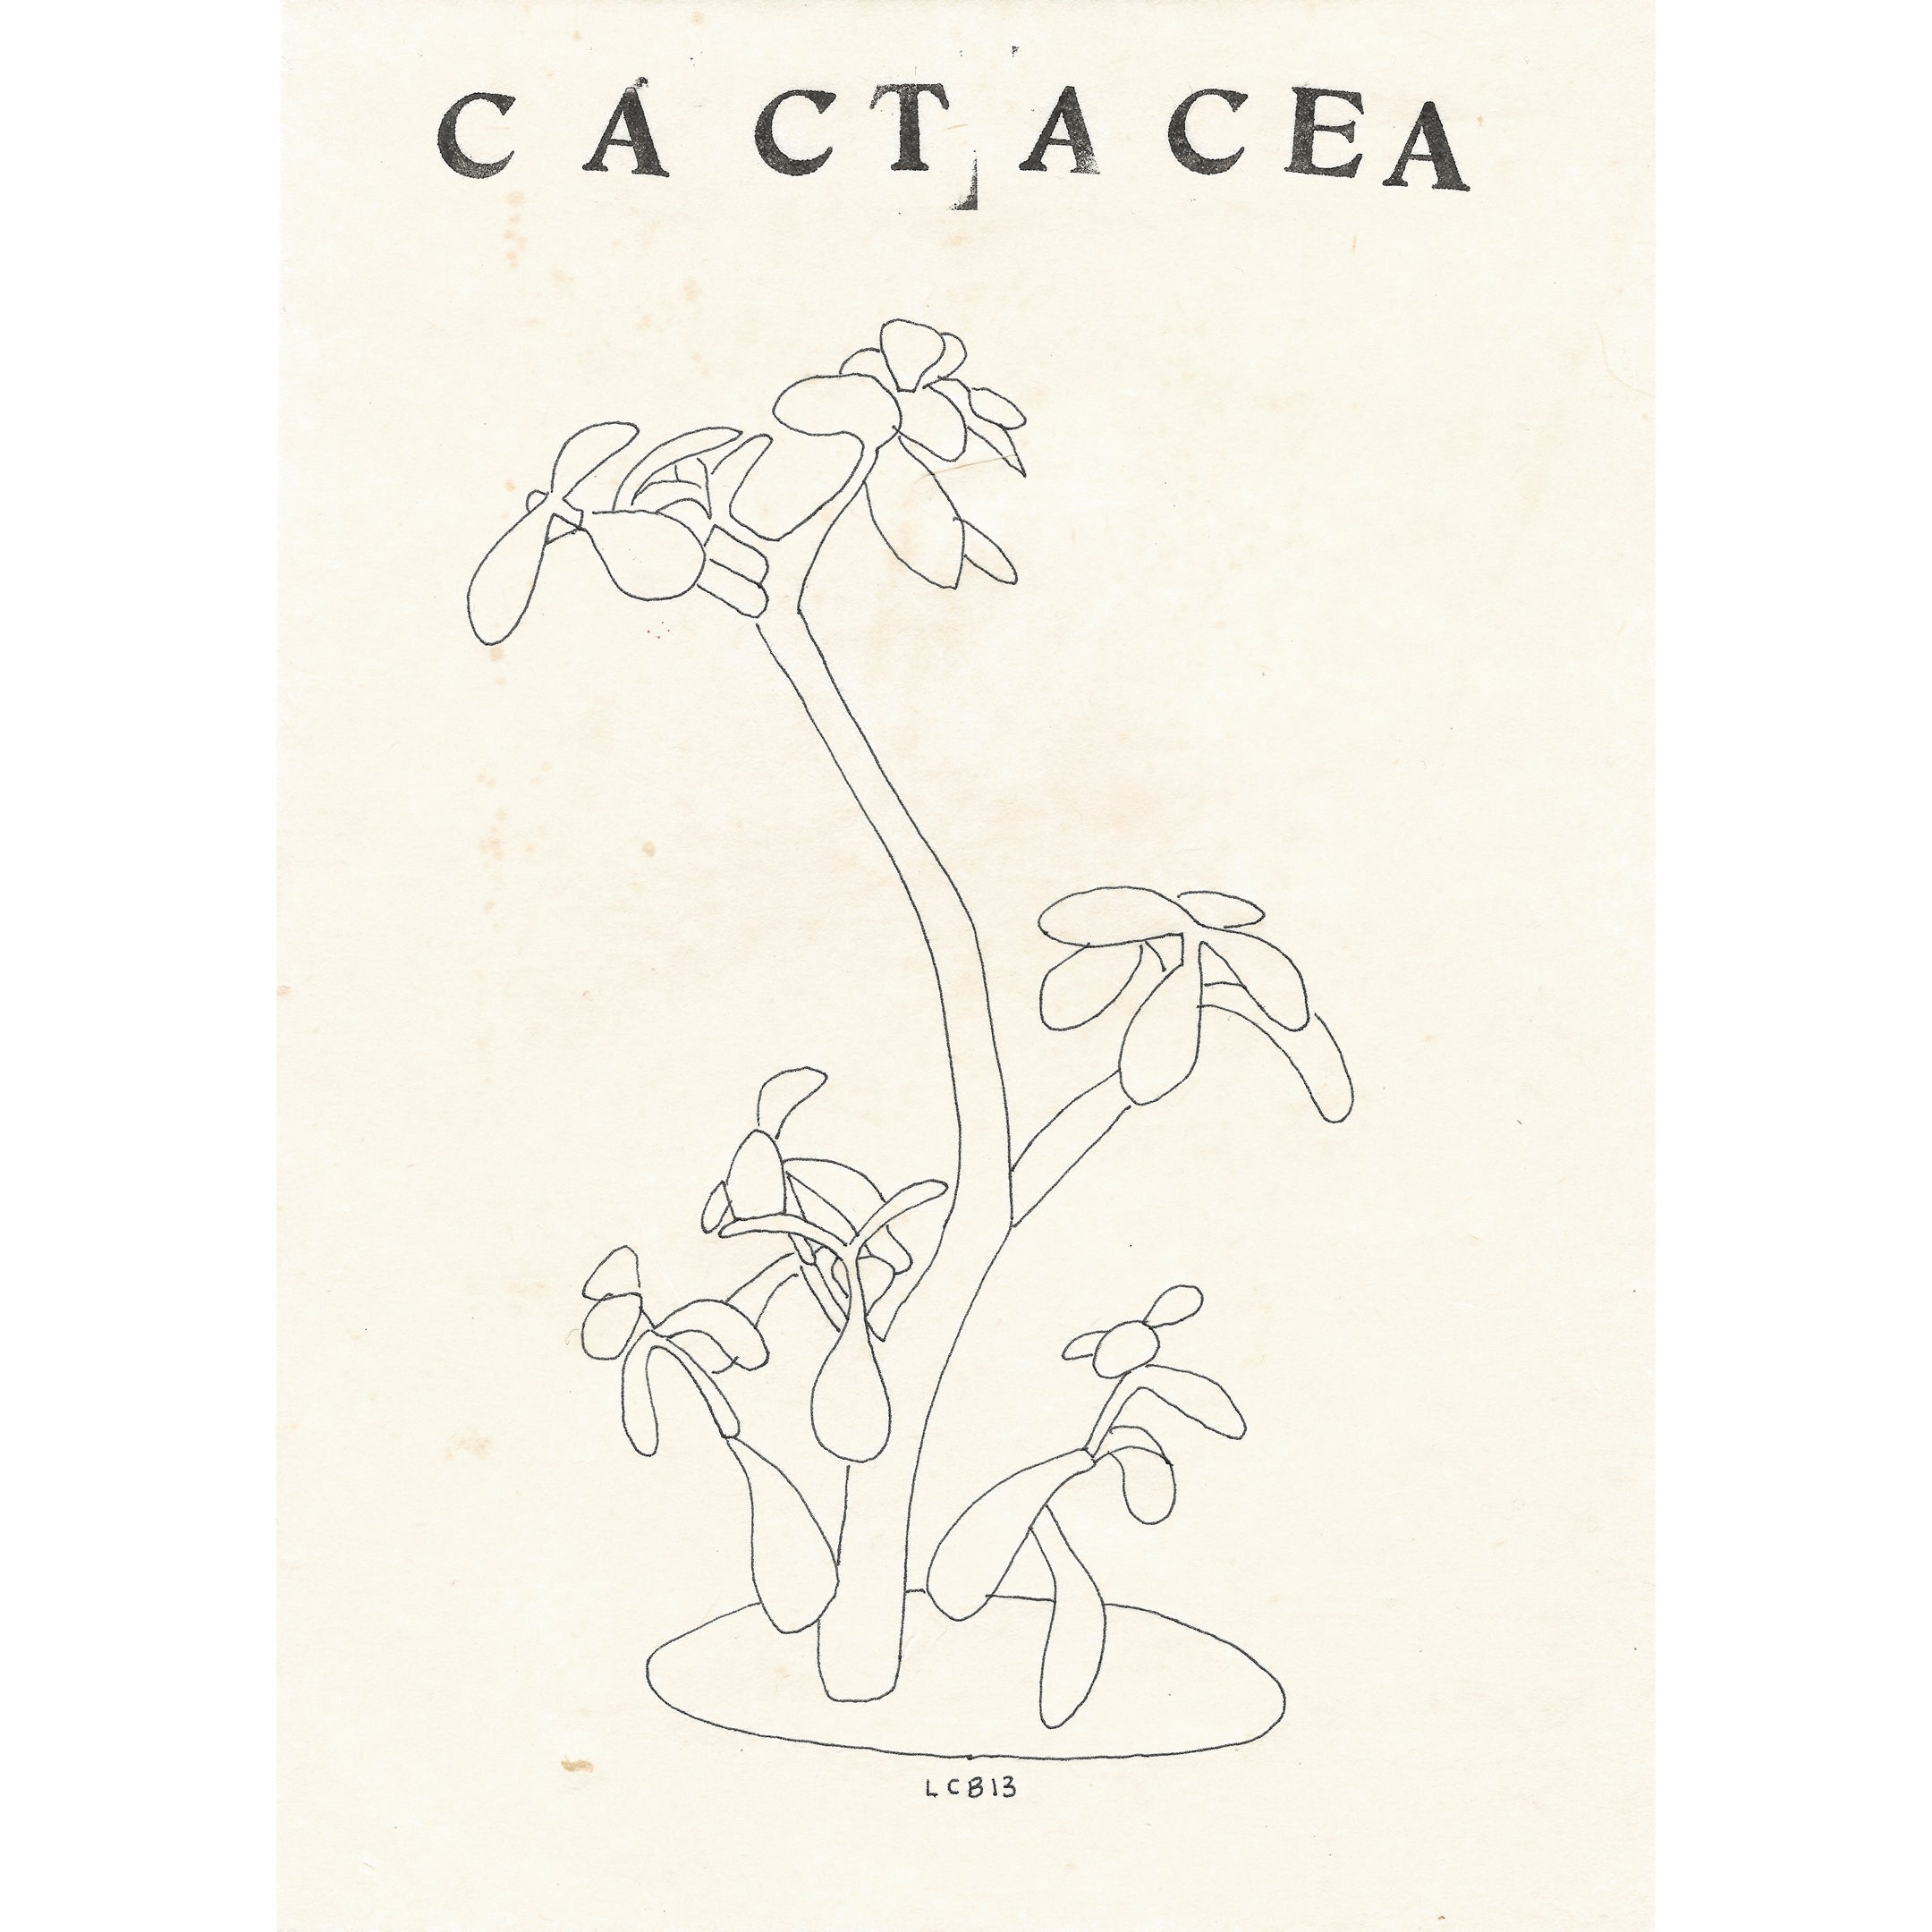 Cactacea